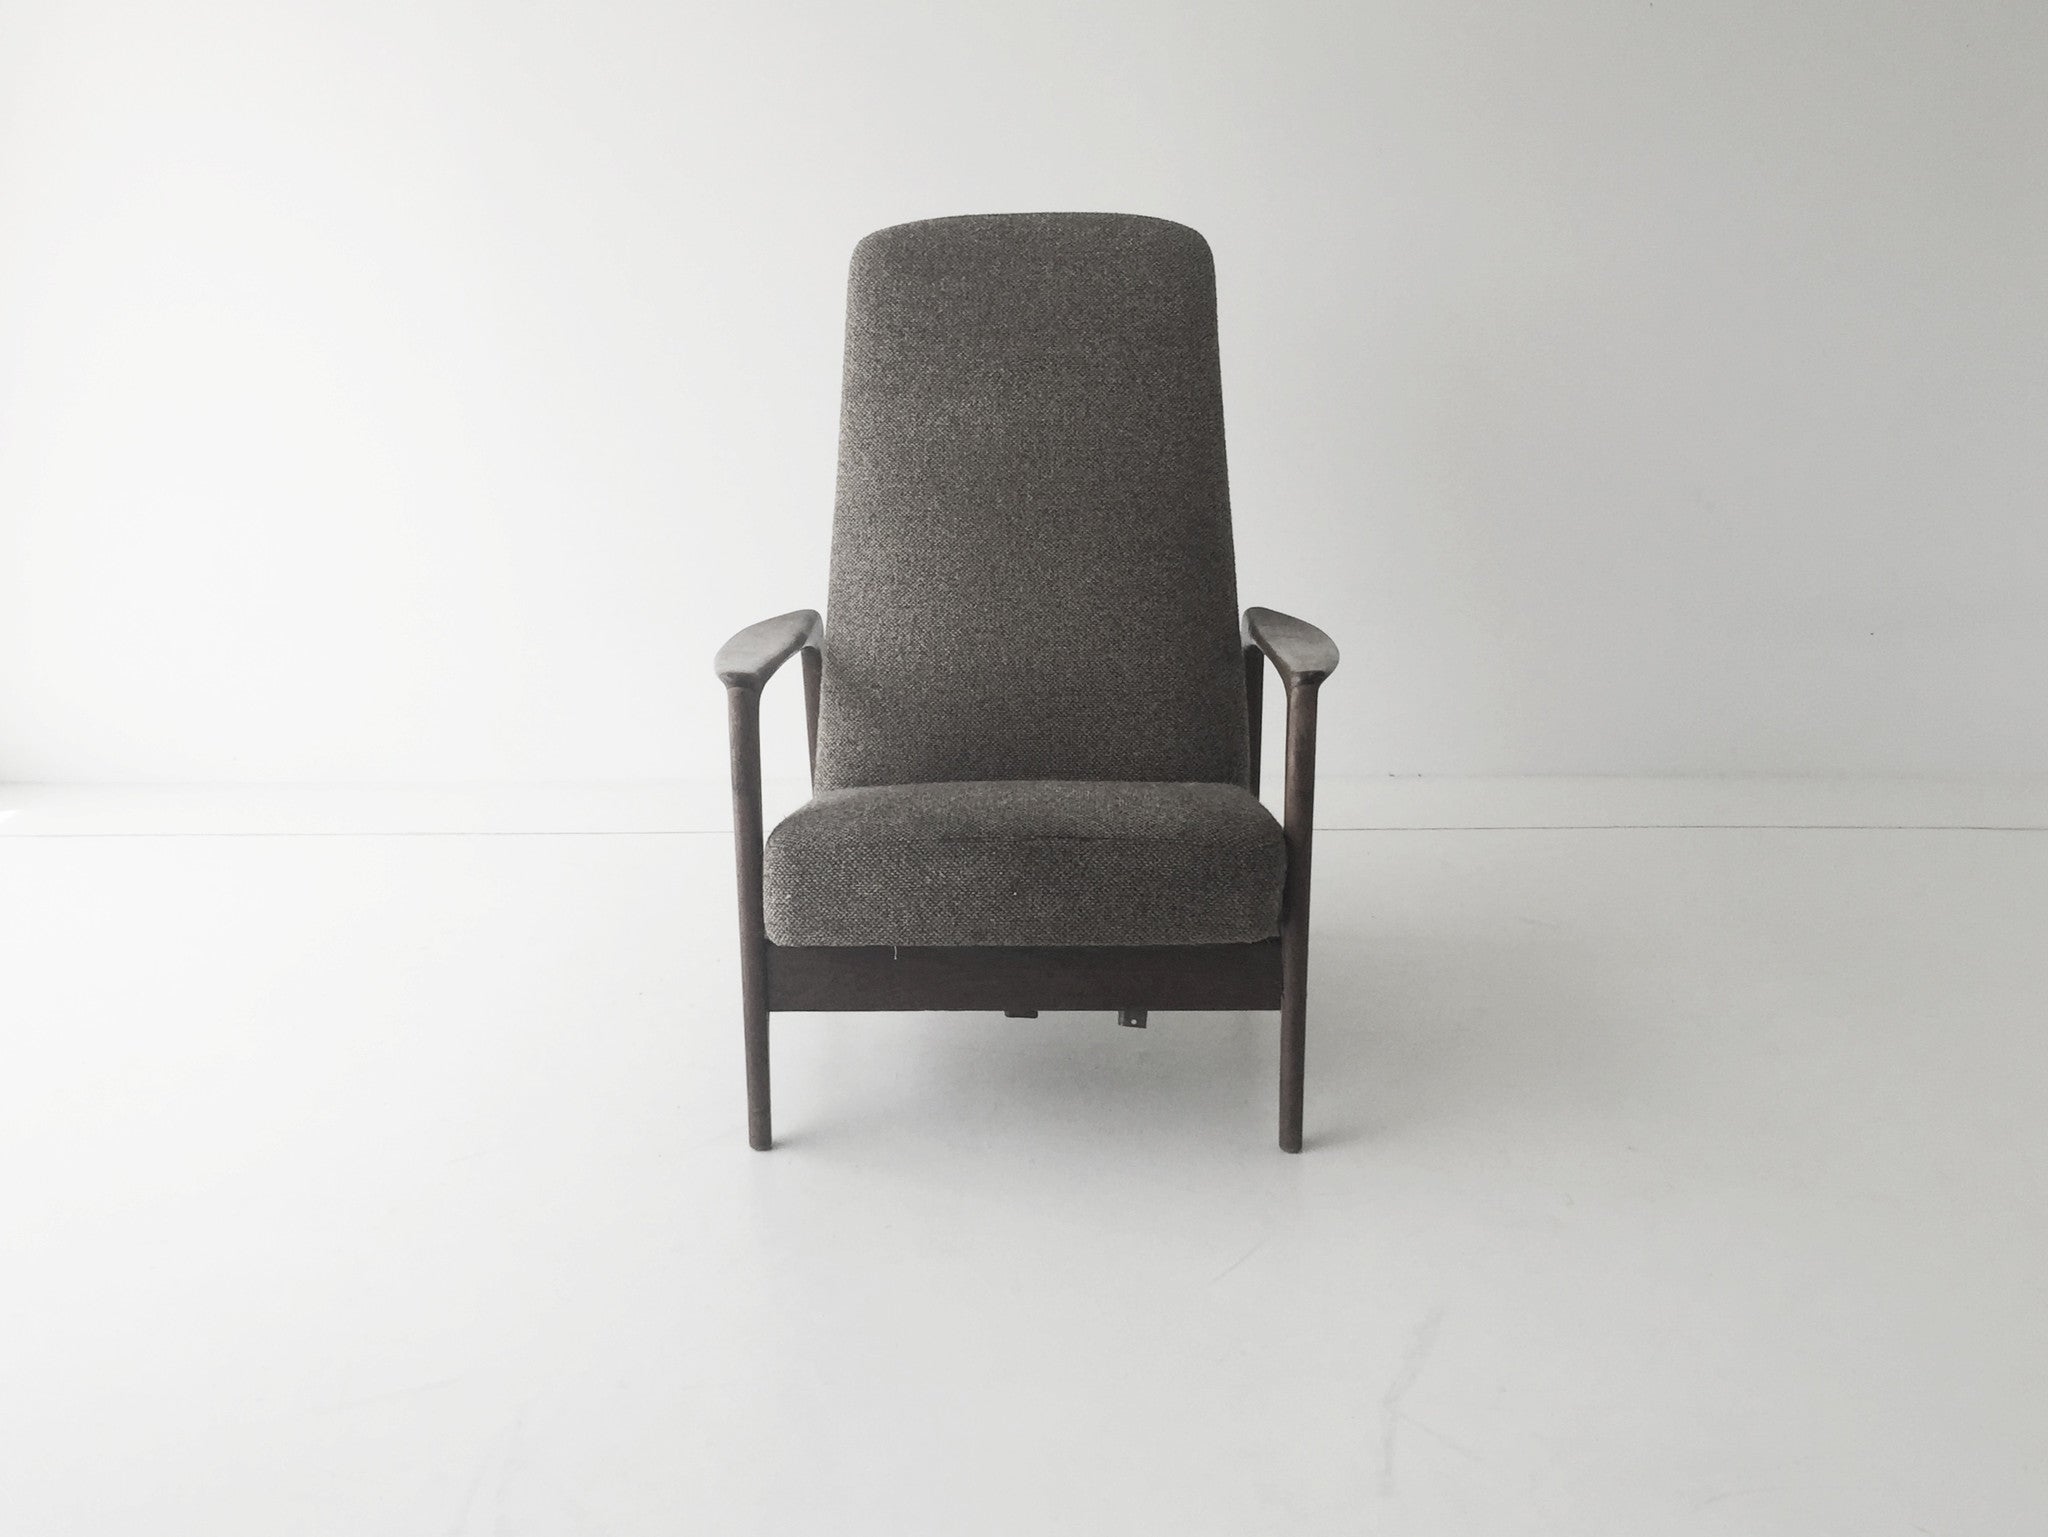 Alf-Svensson-Lounge-Chair-DUX-06031602-06